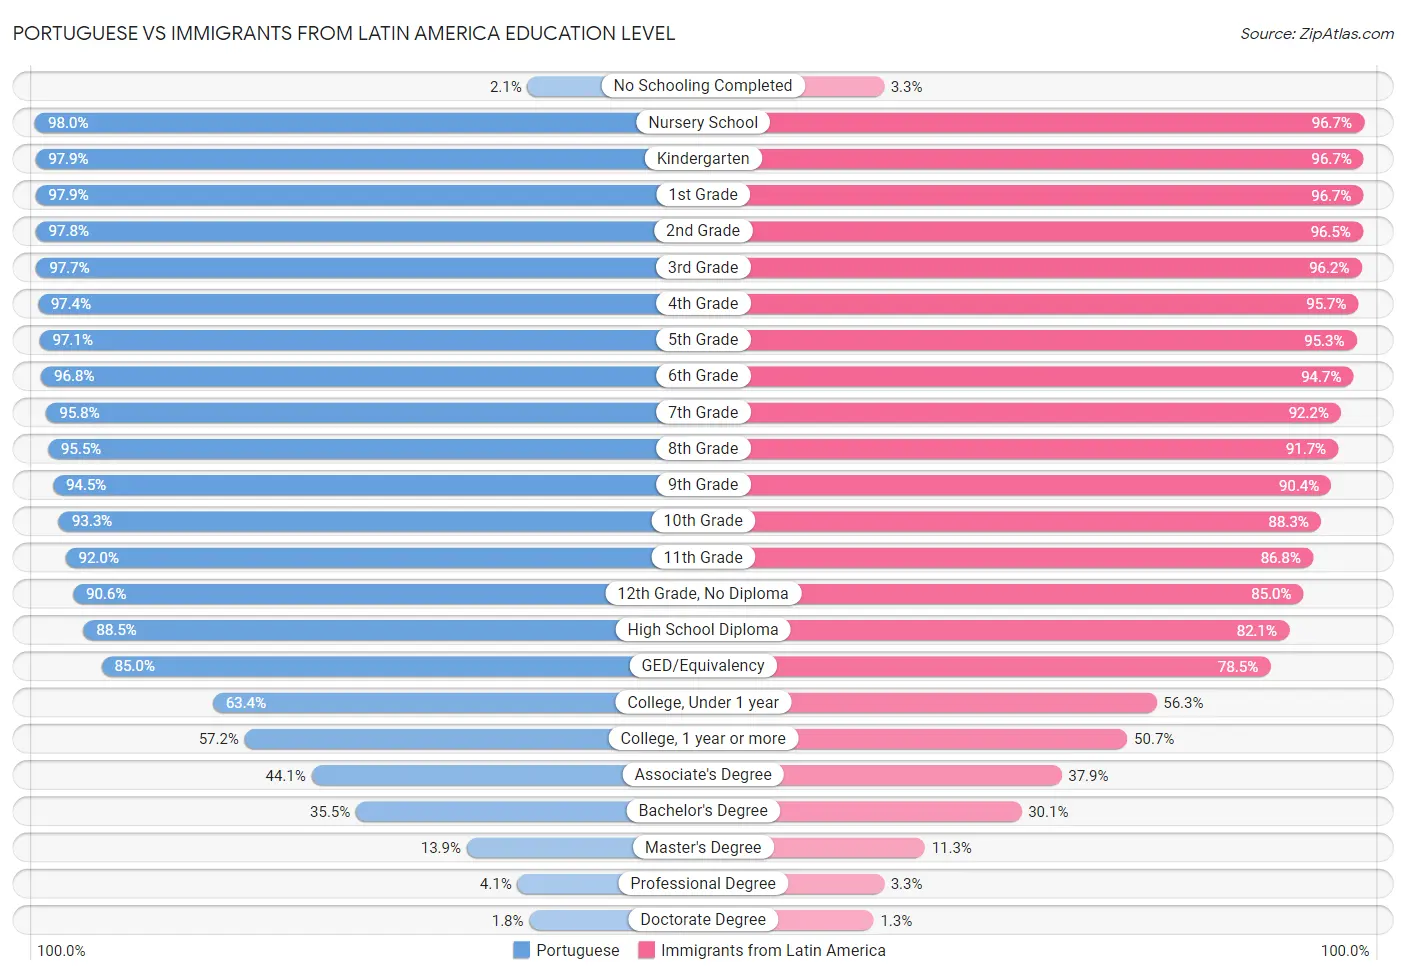 Portuguese vs Immigrants from Latin America Education Level